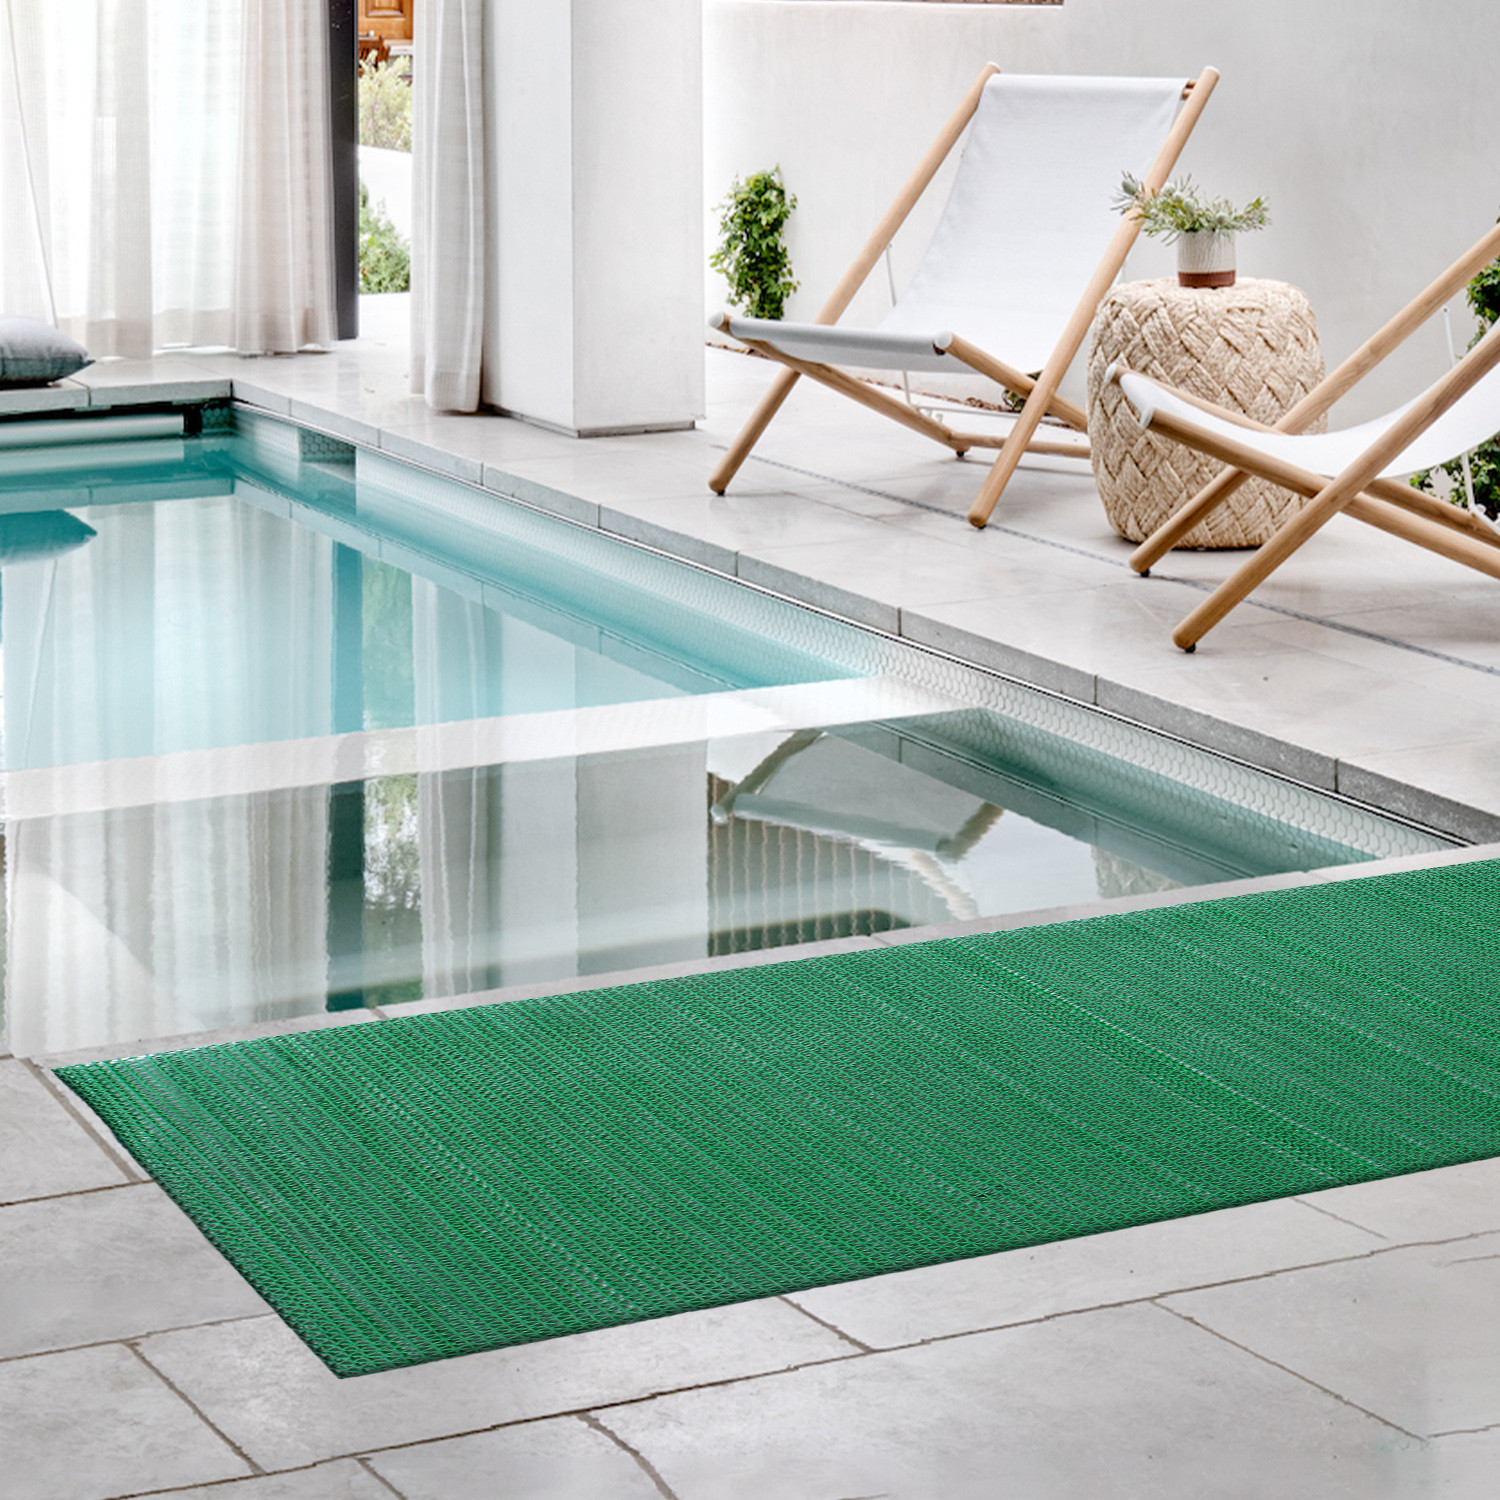 Kuber Industries Rubber Waterproof Anti-Skid Swimming Pool Mat|Shower Mat|Rainmat For Entrance Area,Bathroom,2 x 12 Feet (Green)